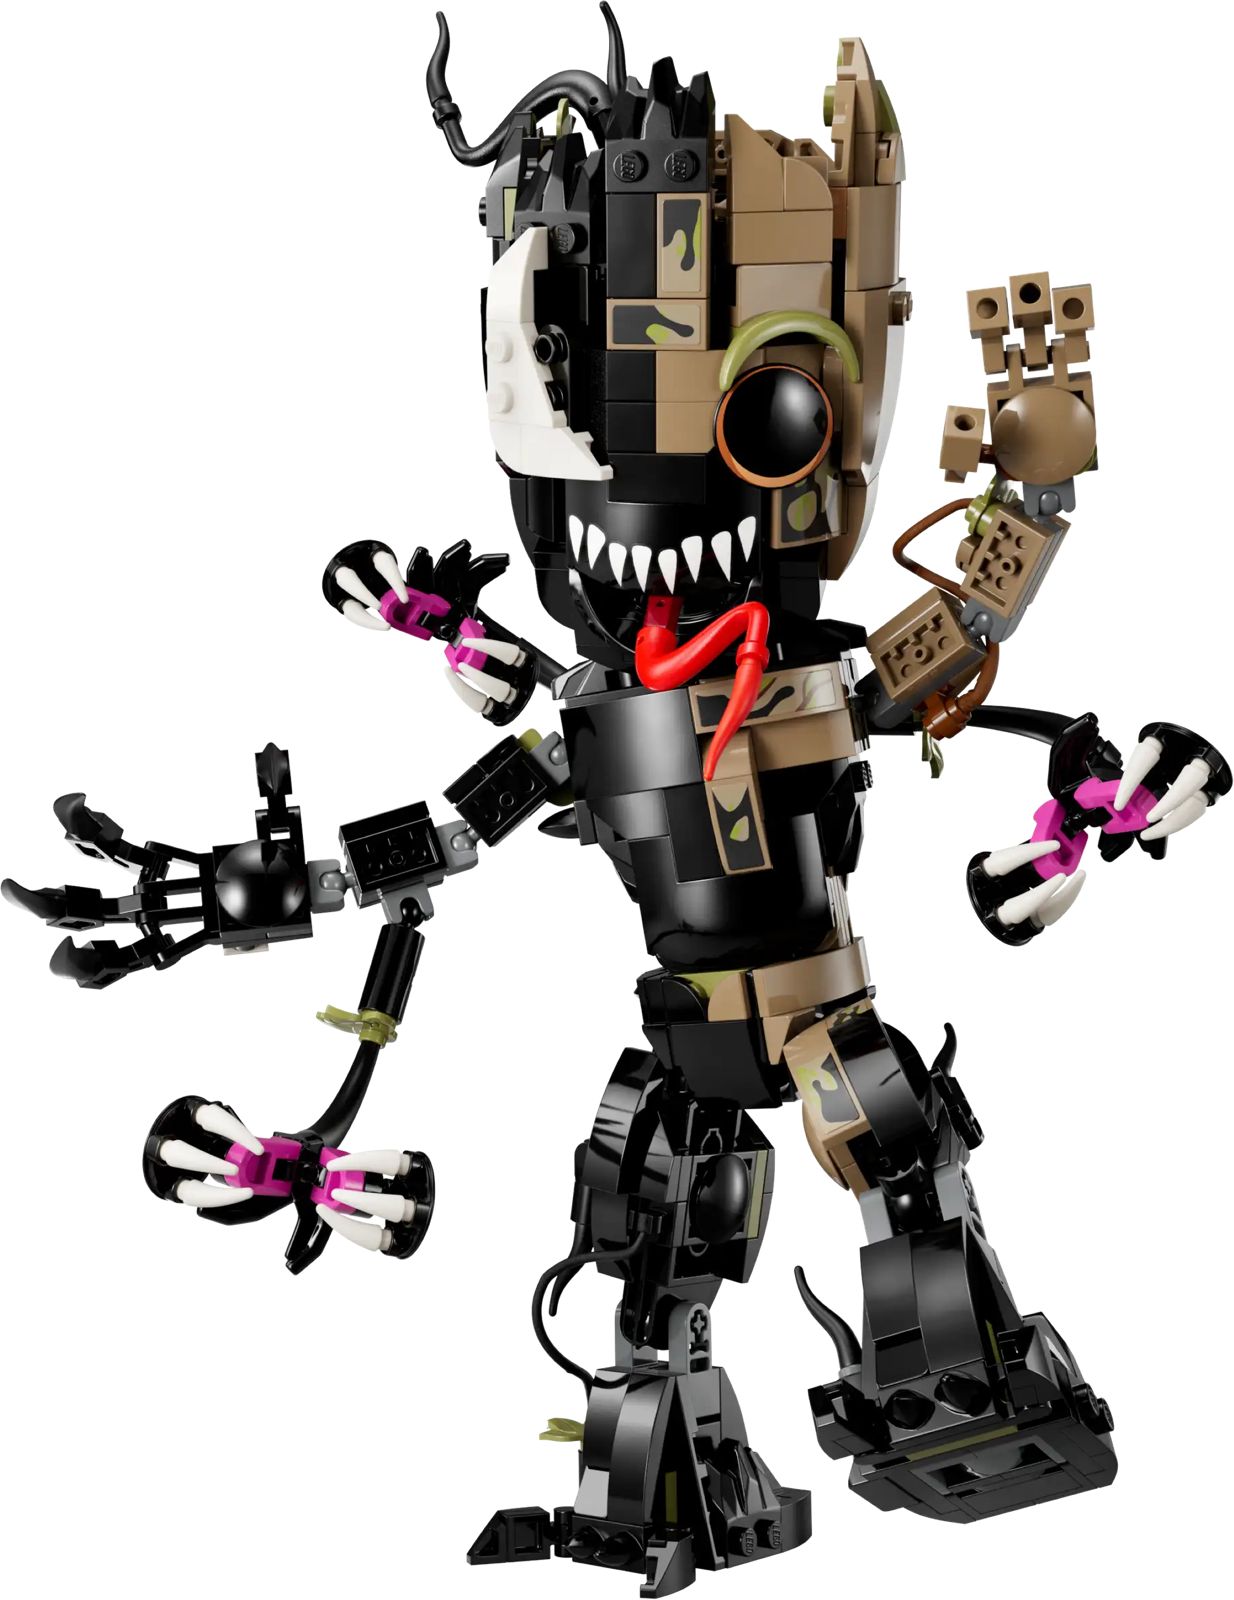 Lego Marvel Groot Venomizado 76249